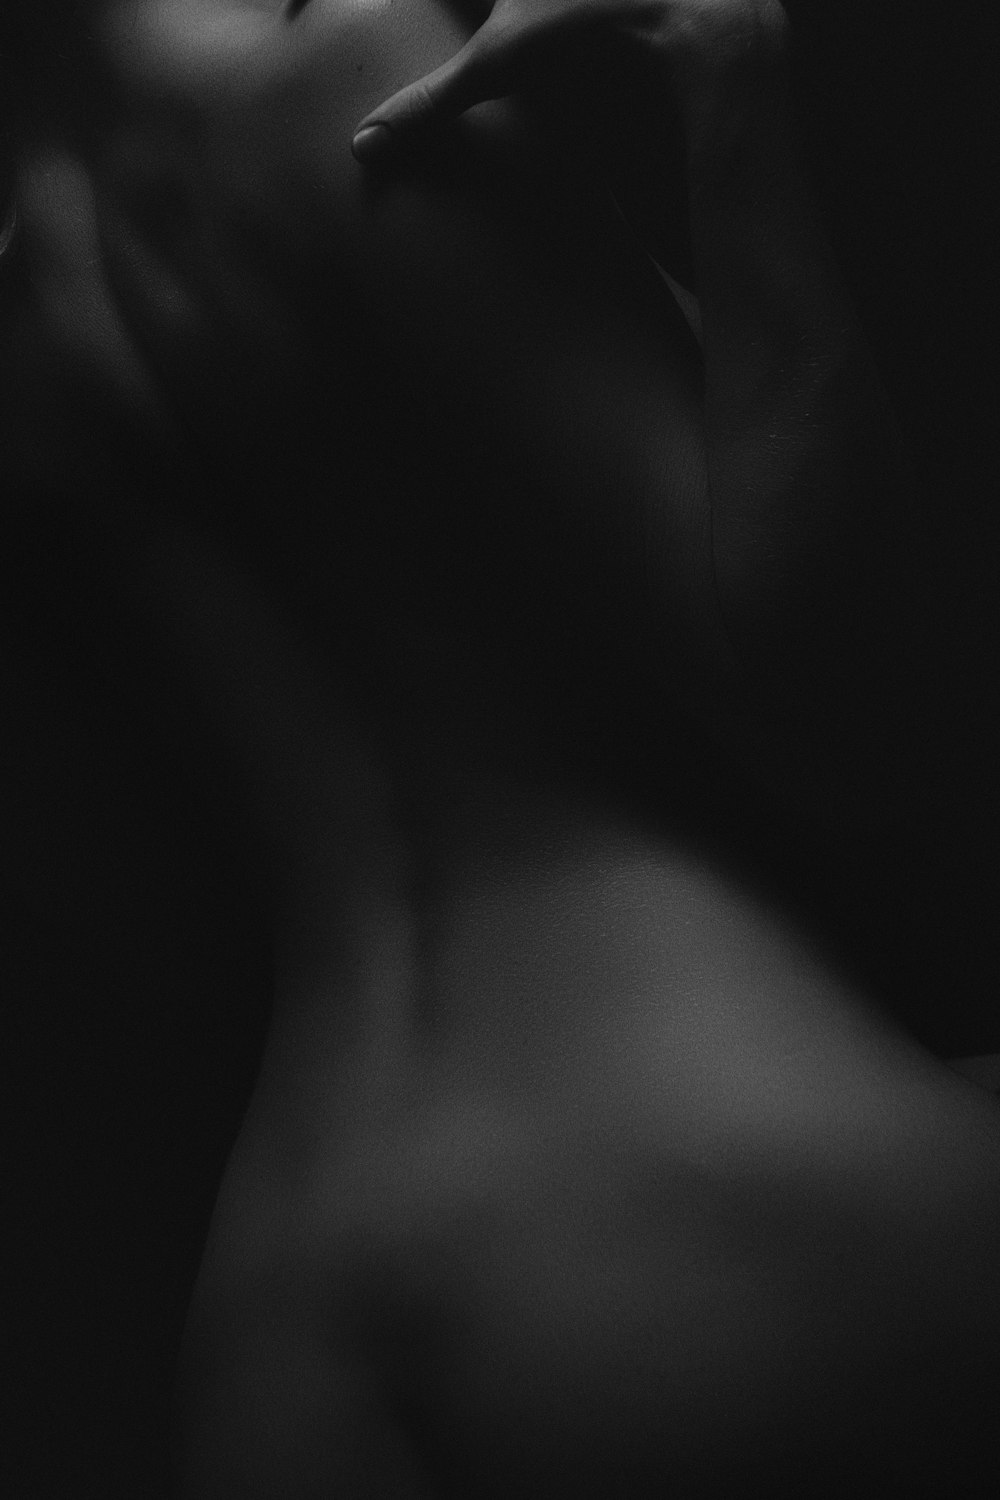 Erotica Black & White | 100+ best free white, black, human and woman photos  on Unsplash